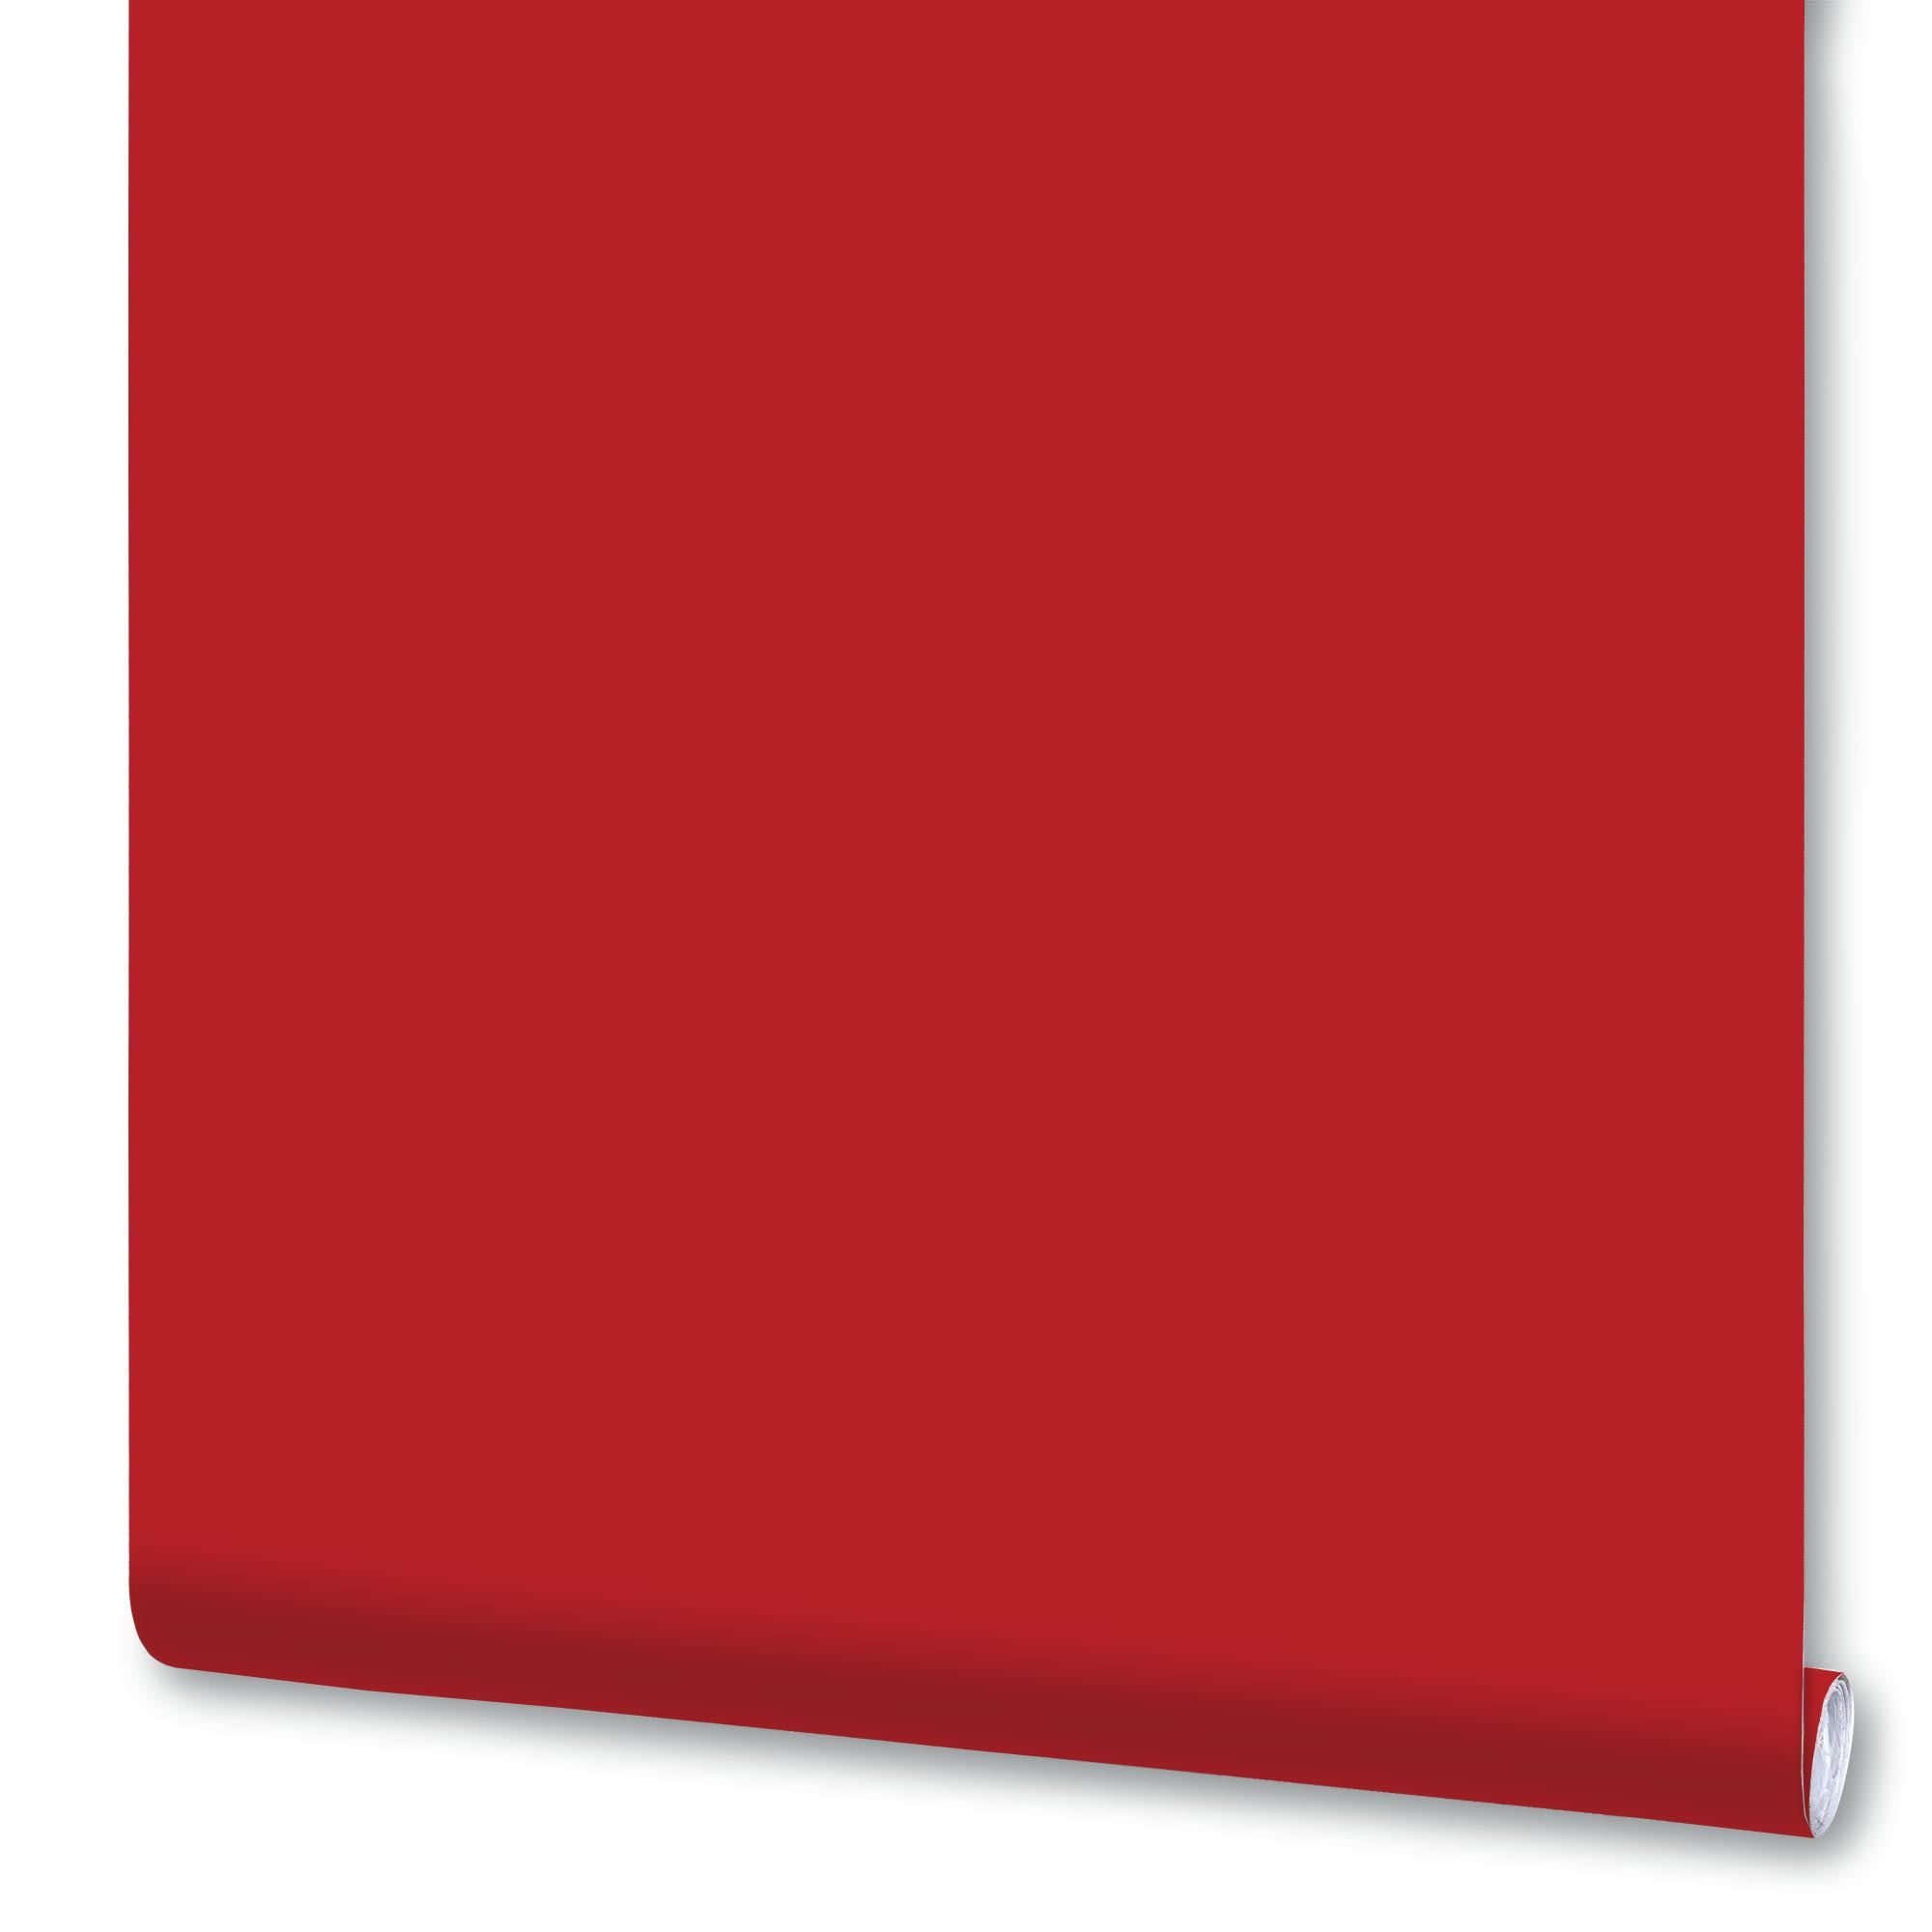 Плёнка Deluxe самоклеящаяся, 0,45x2 м, рубиново-красная, глянцевая, 7011В, 1 рулон плёнка deluxe самоклеящаяся 0 45x2 м голография серебро 6019 1 рулон